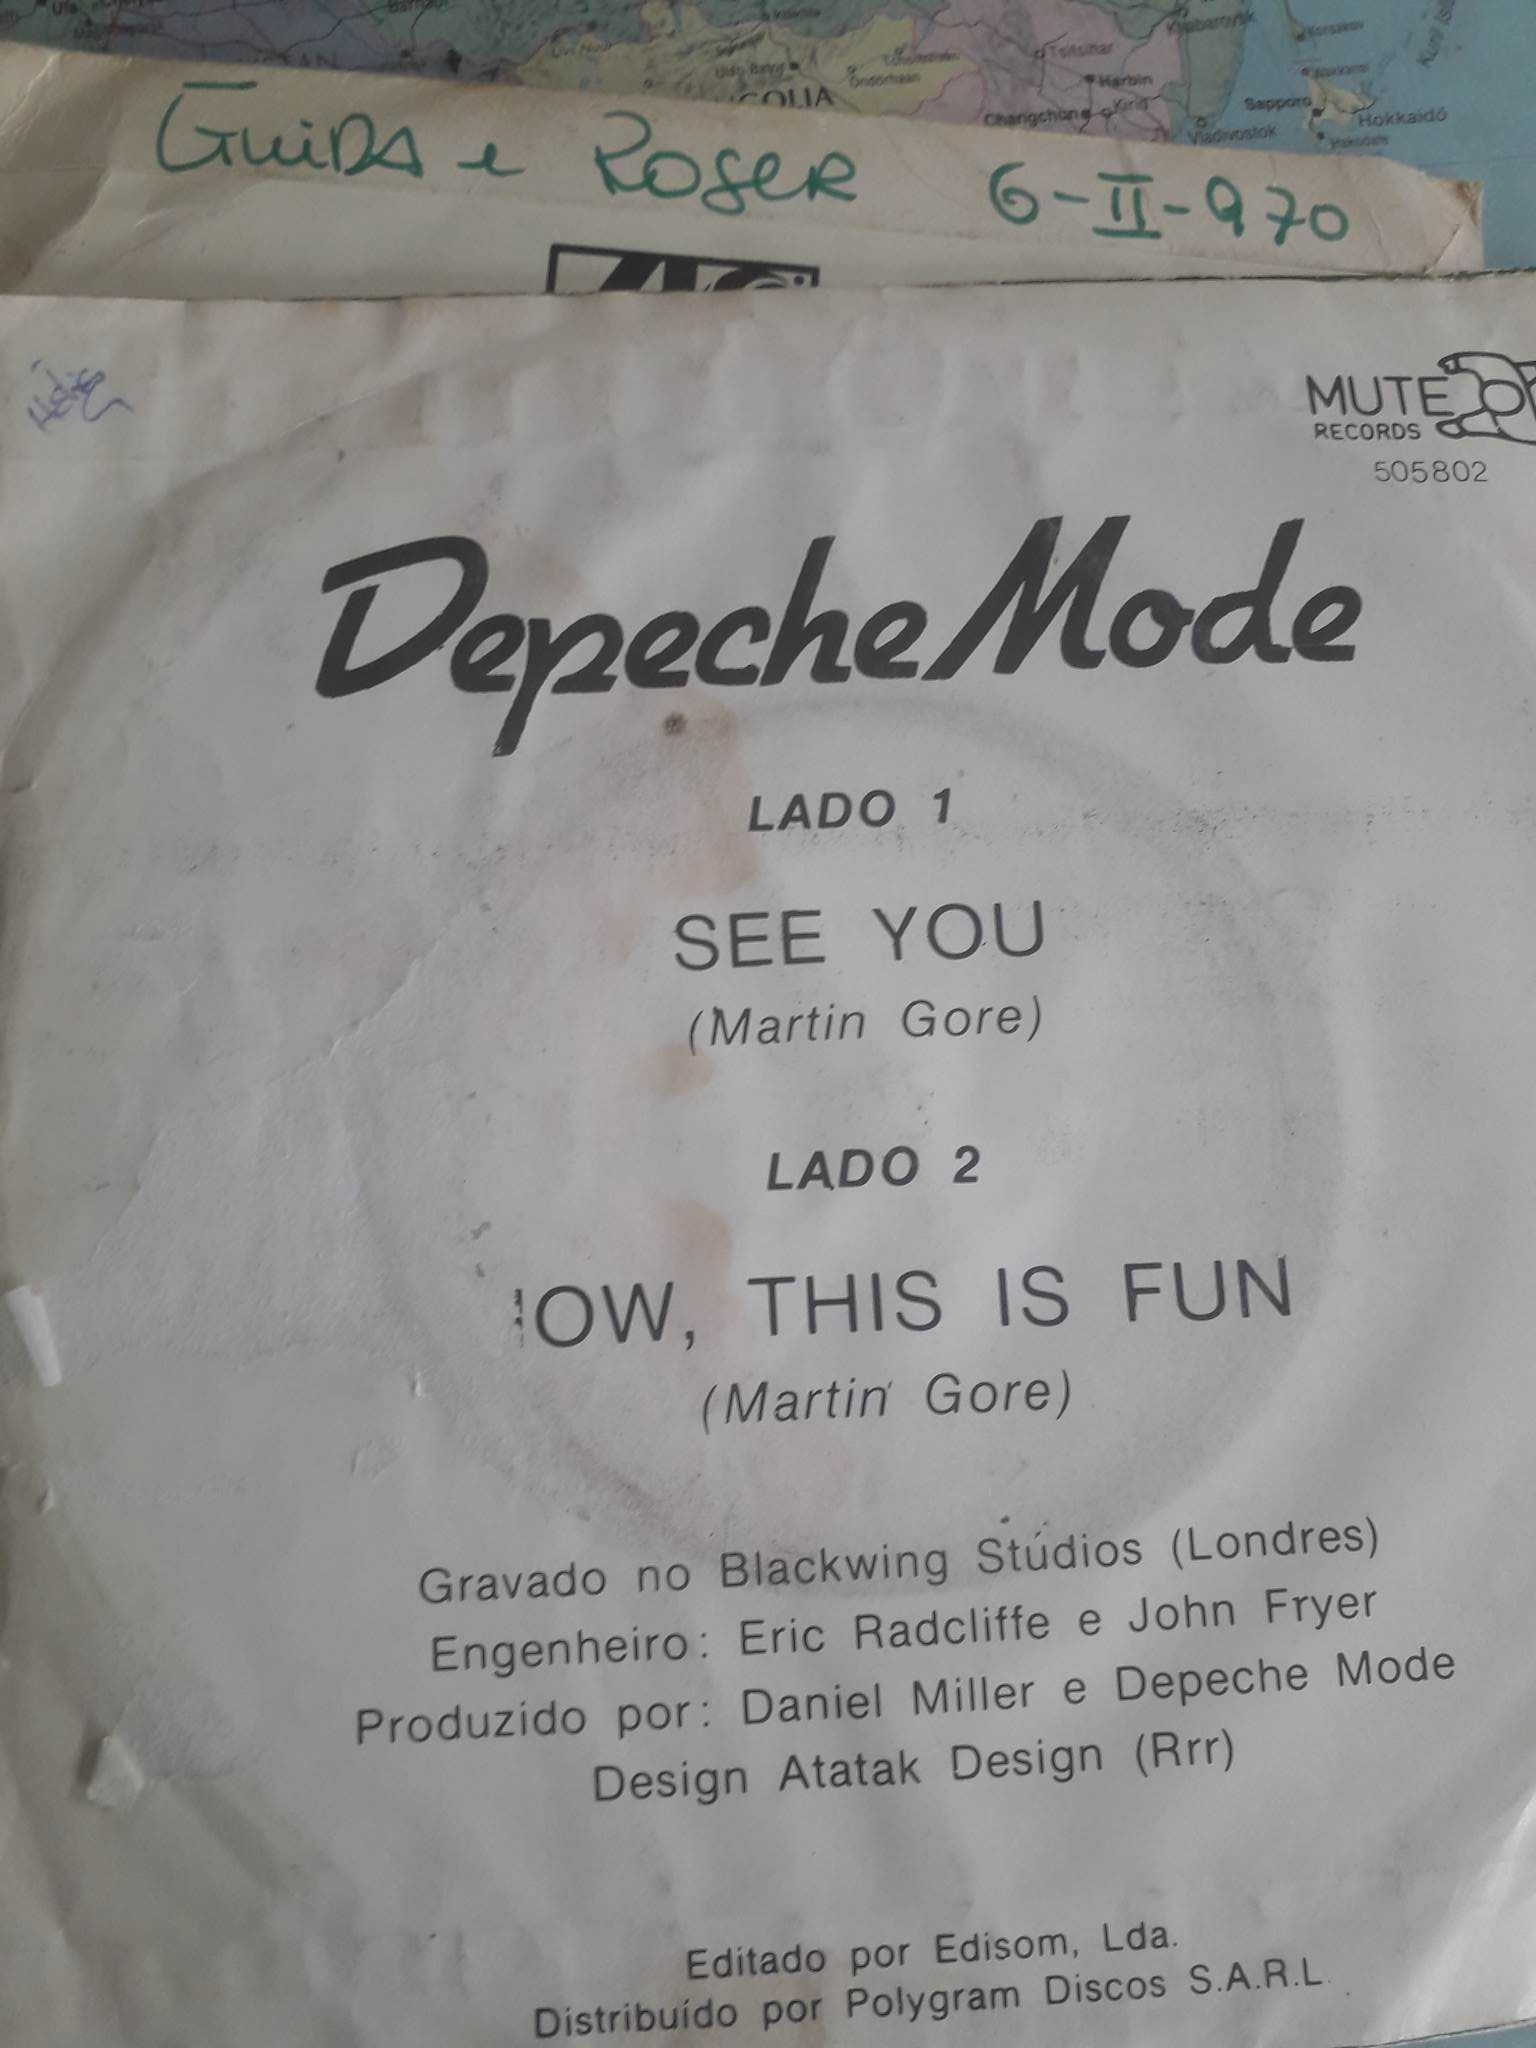 Vinil 45 RPM - Depeche Mode